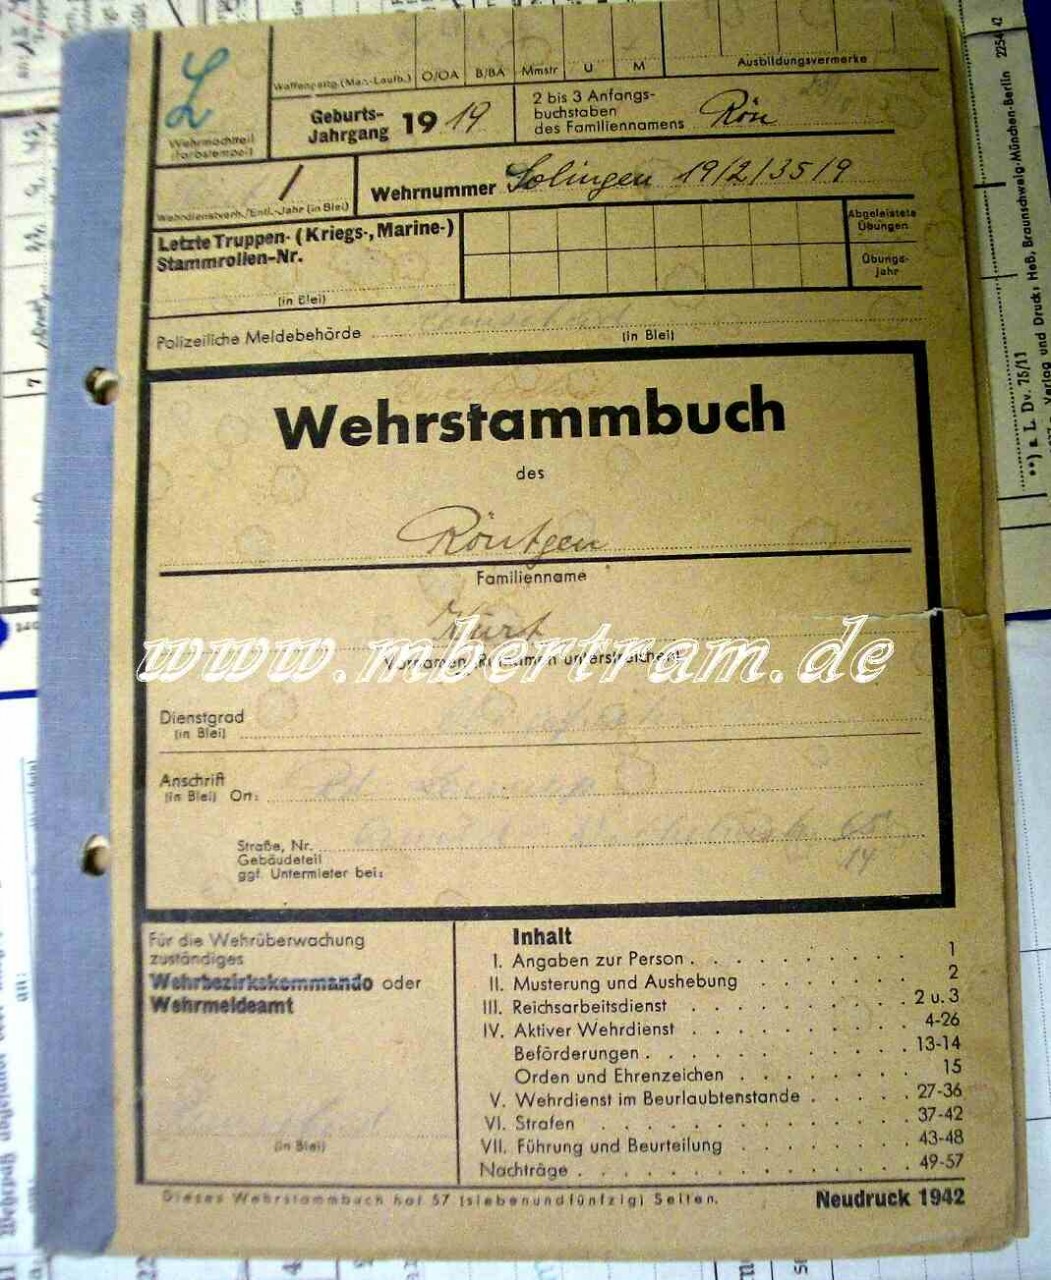 8. LW Felddivision Wehrstammbuch 98K, P08, MG 17,15, 42